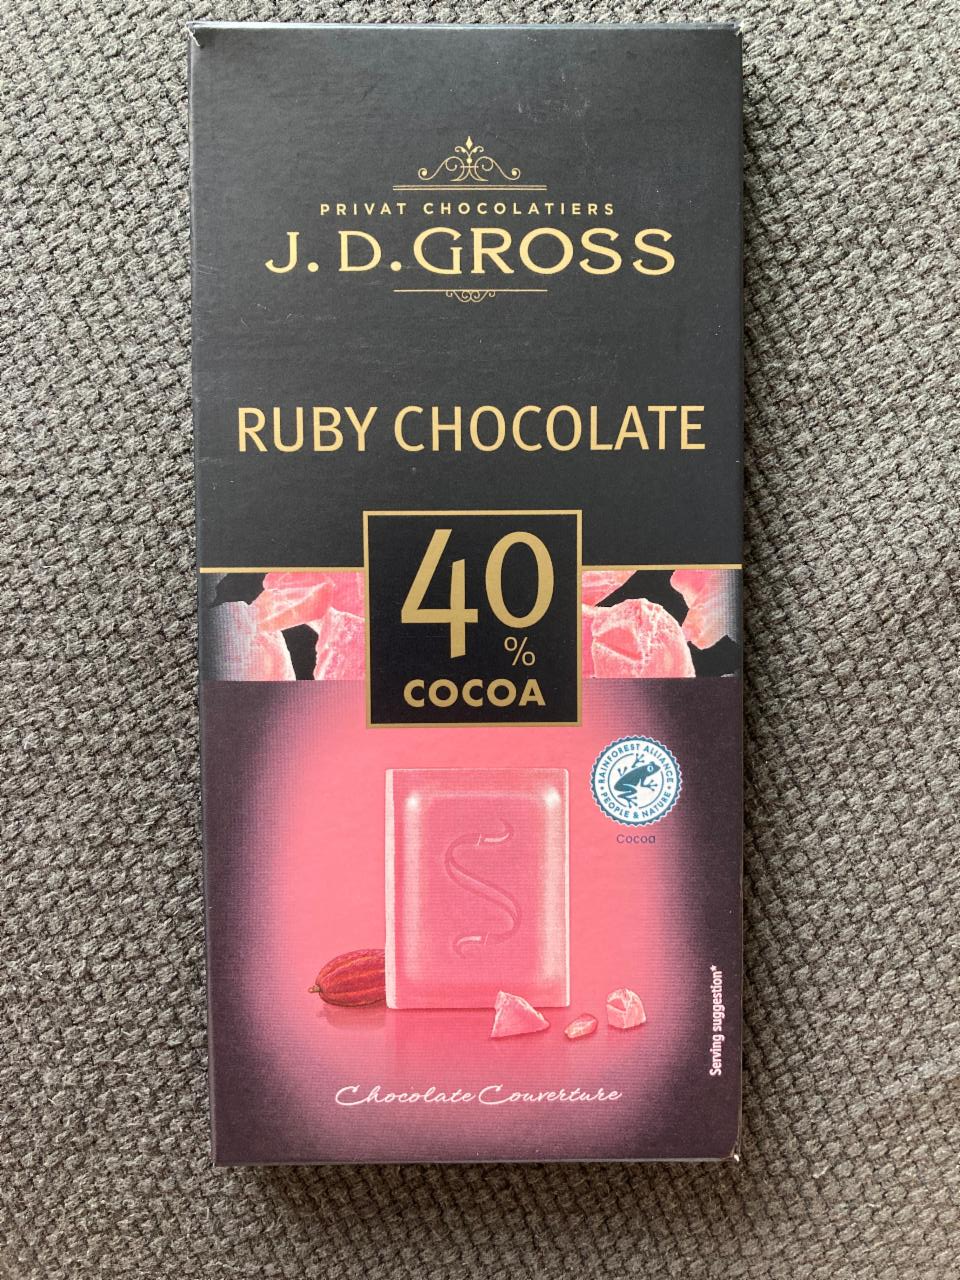 Képek - Ruby chocolate J. D. Gross